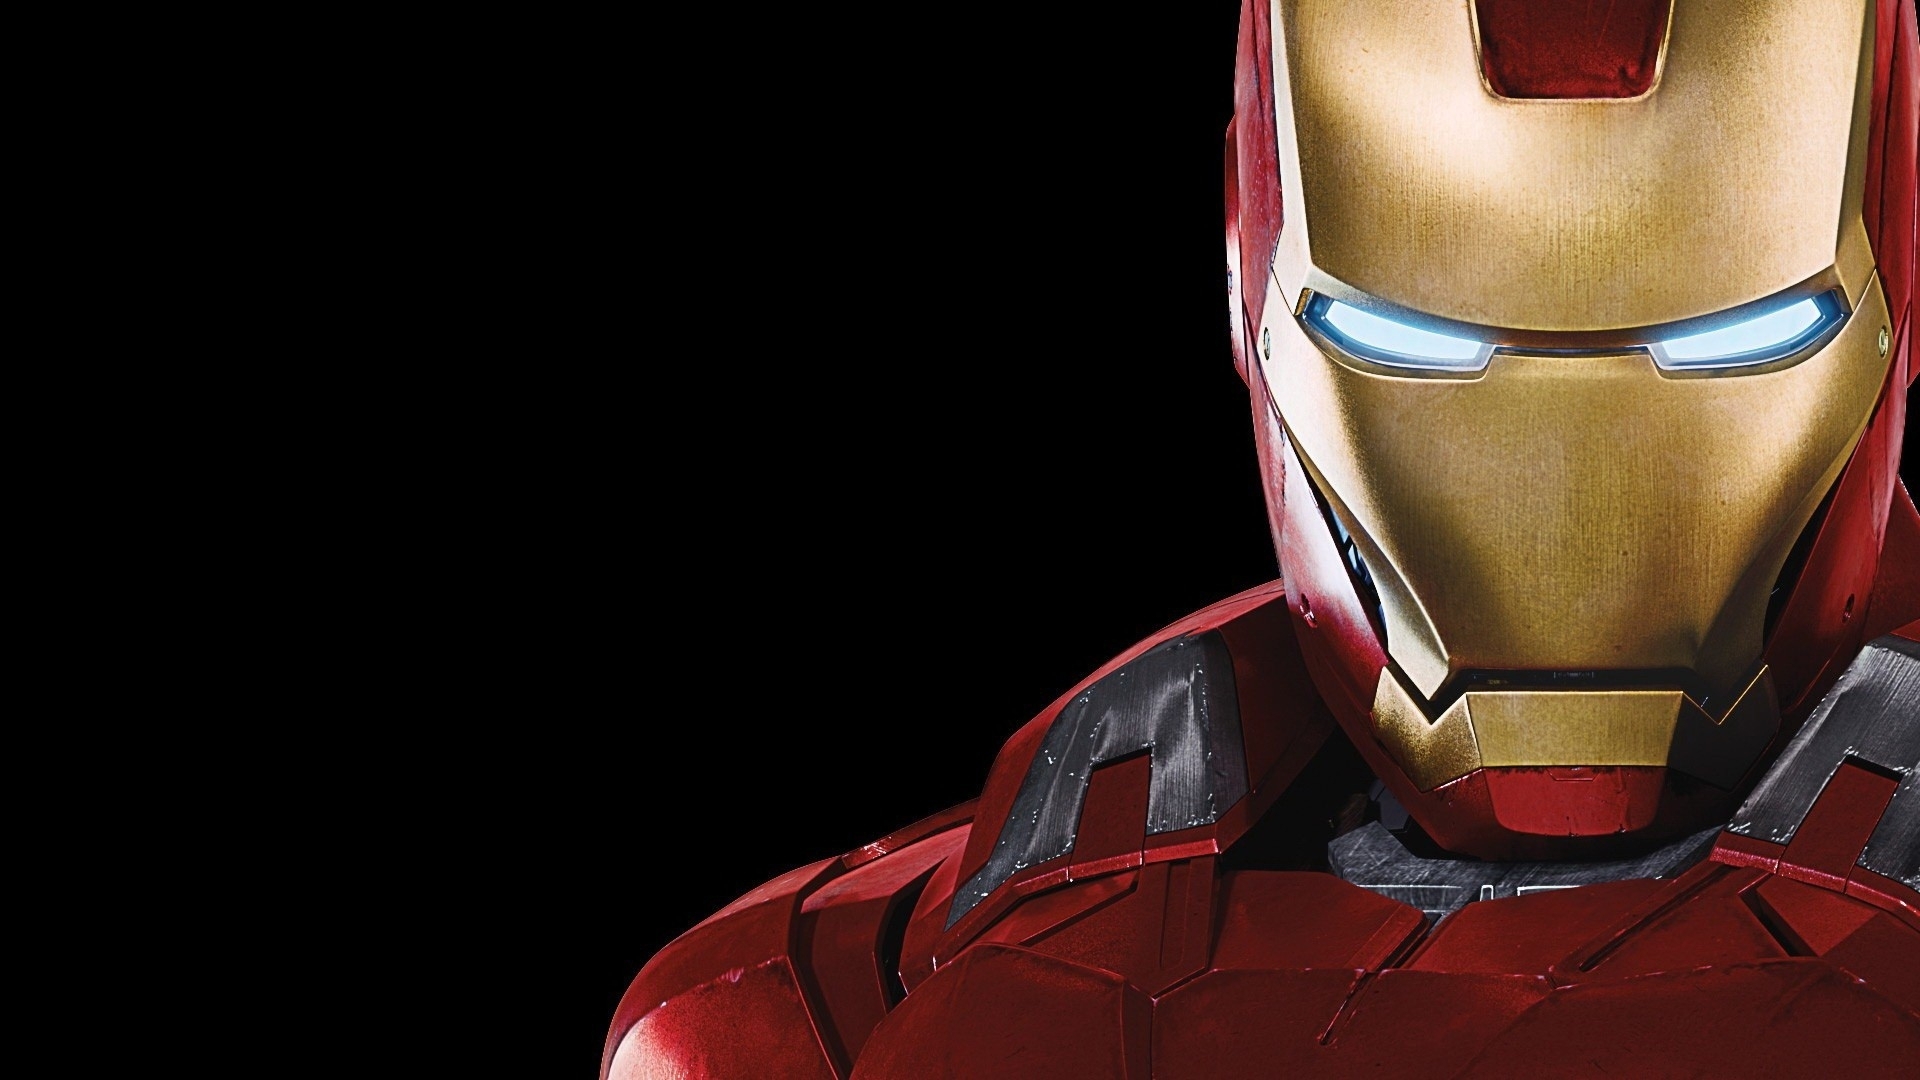 Iron Man Robots Armor Tony Stark Robert Downey Jr Actors The Avengers